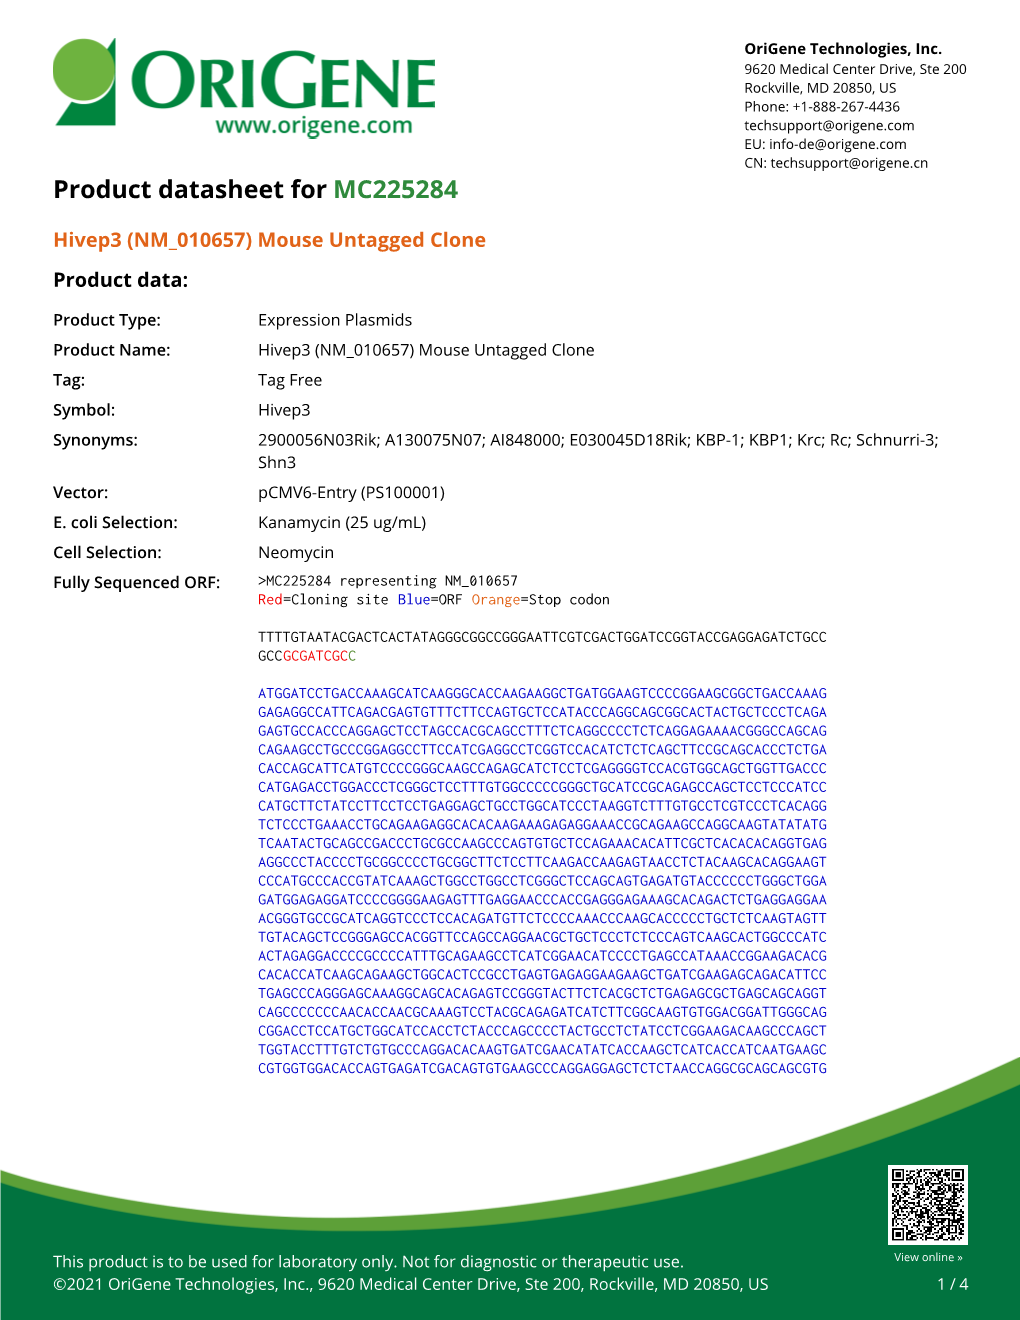 Hivep3 (NM 010657) Mouse Untagged Clone – MC225284 | Origene